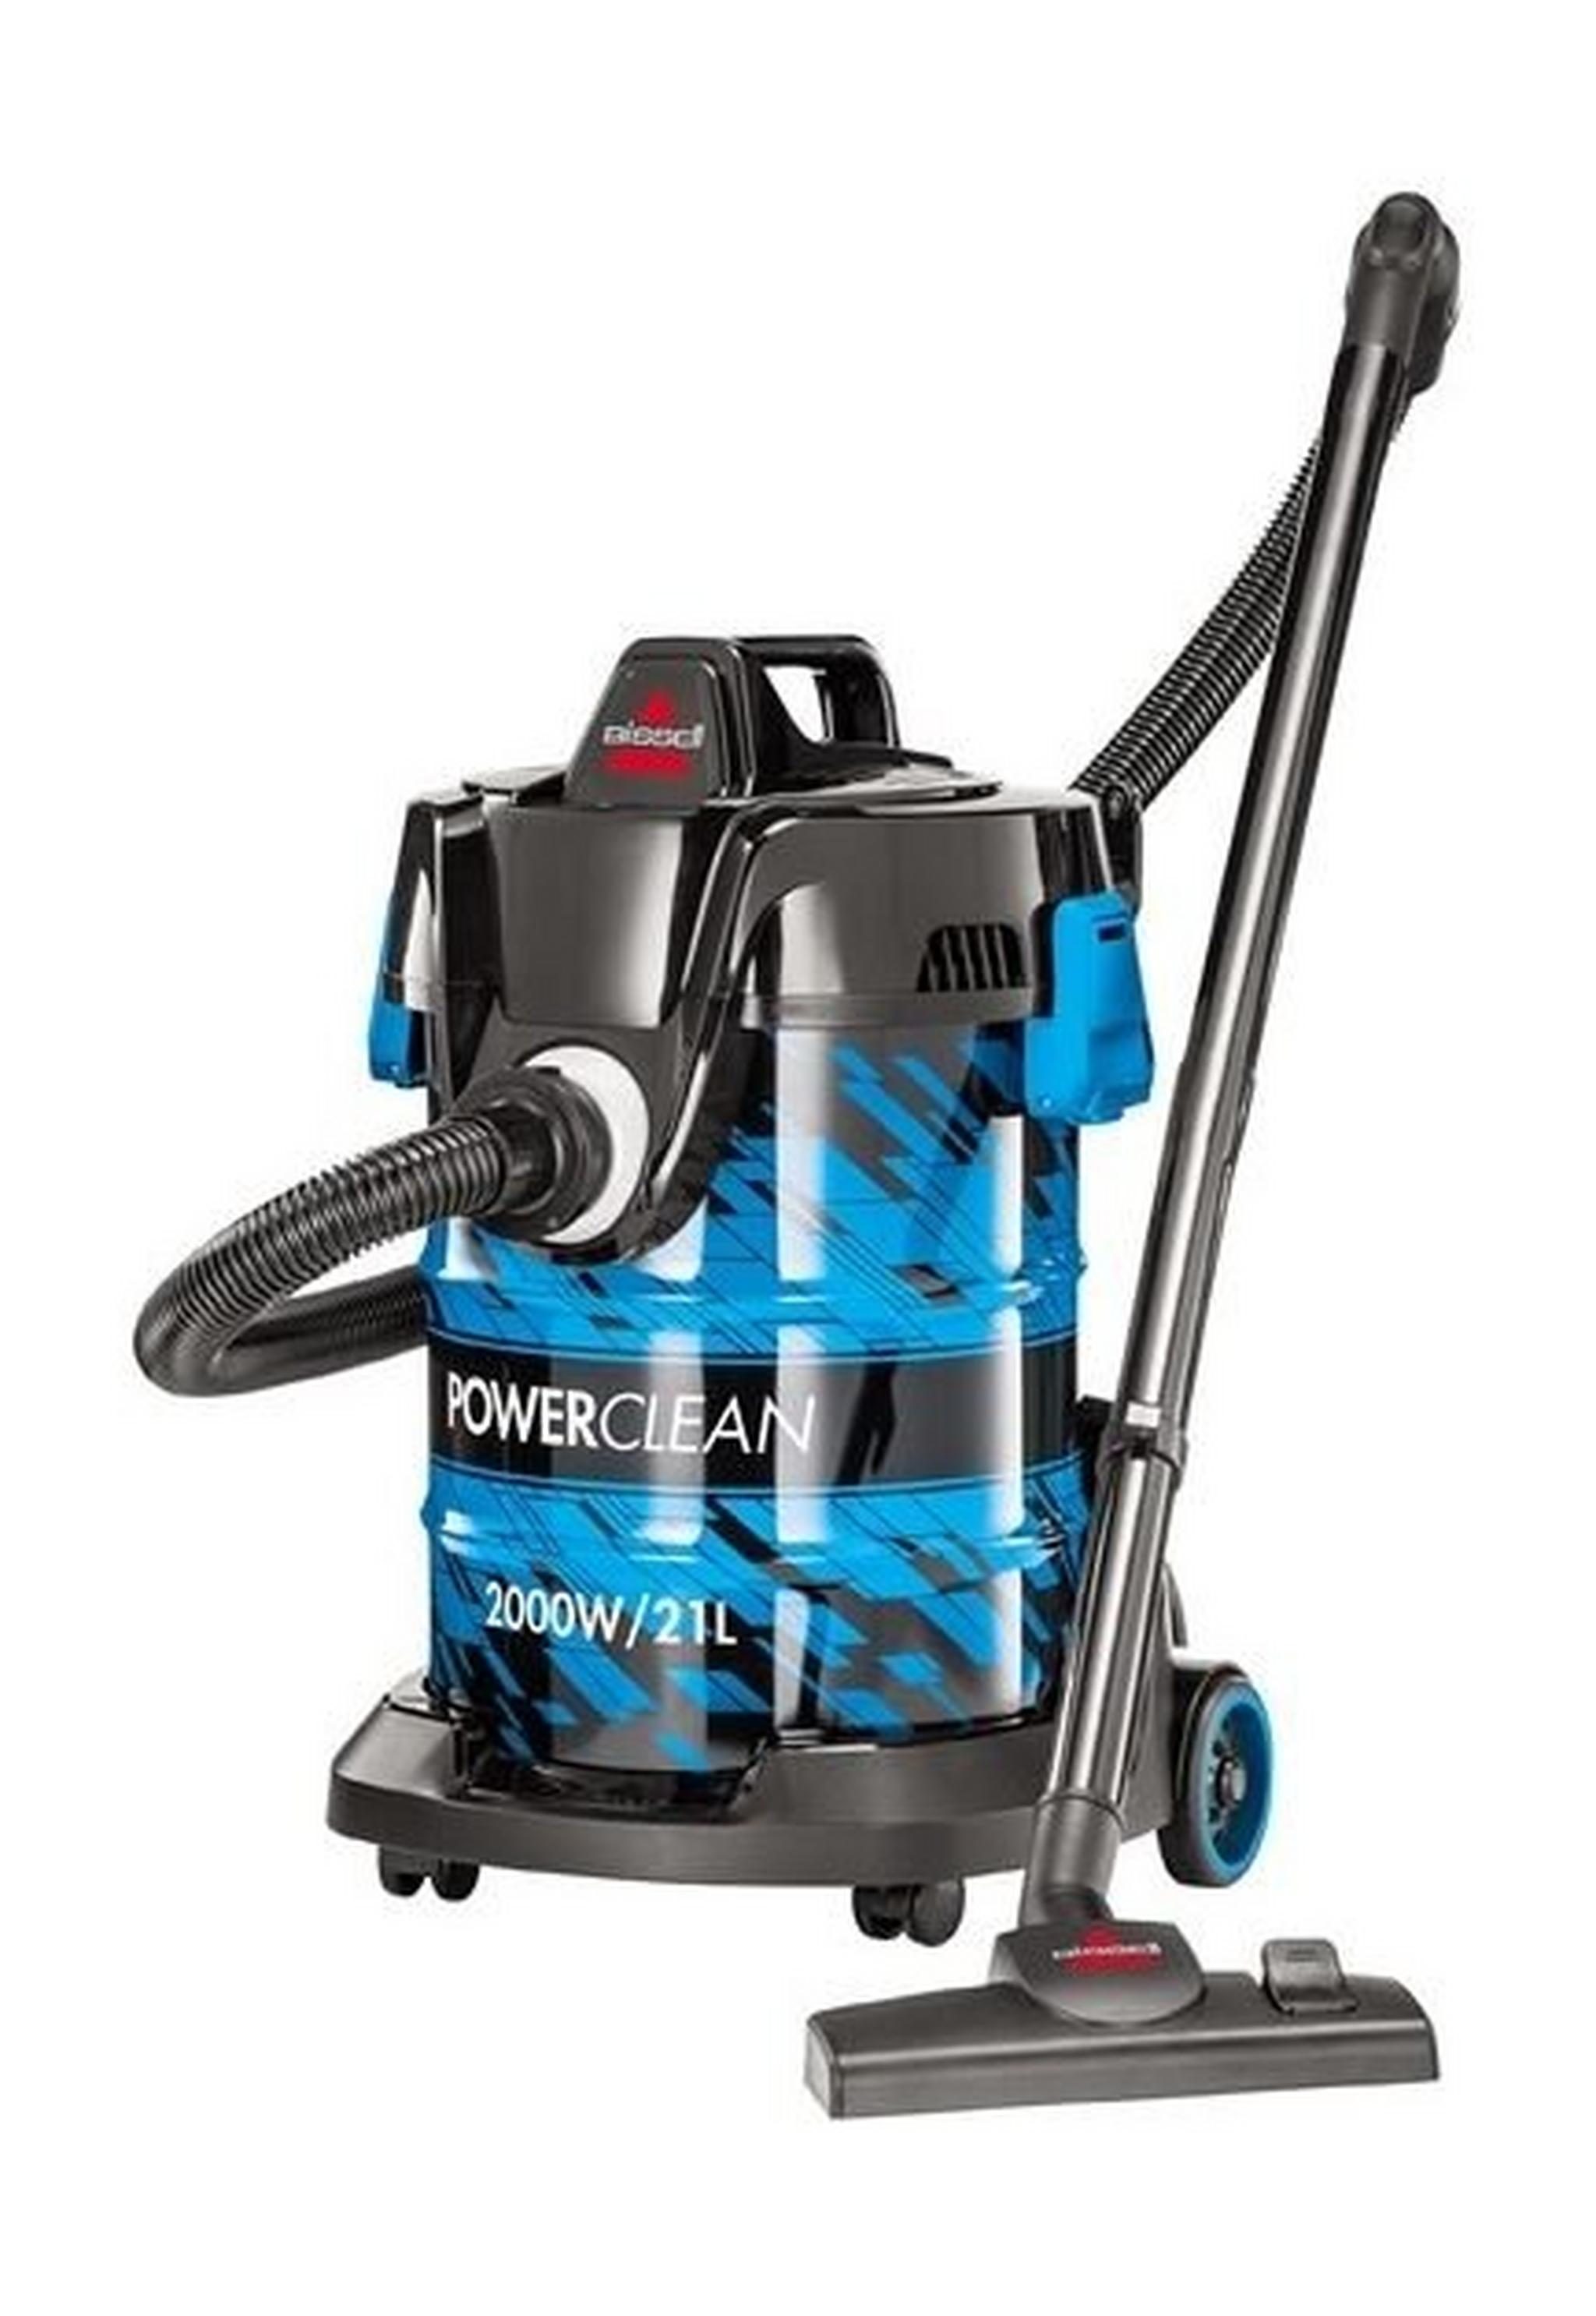 Bissell PowerClean Drum Vacuum Cleaner, 2000W, 21 Liters, 2027E - Black/Blue